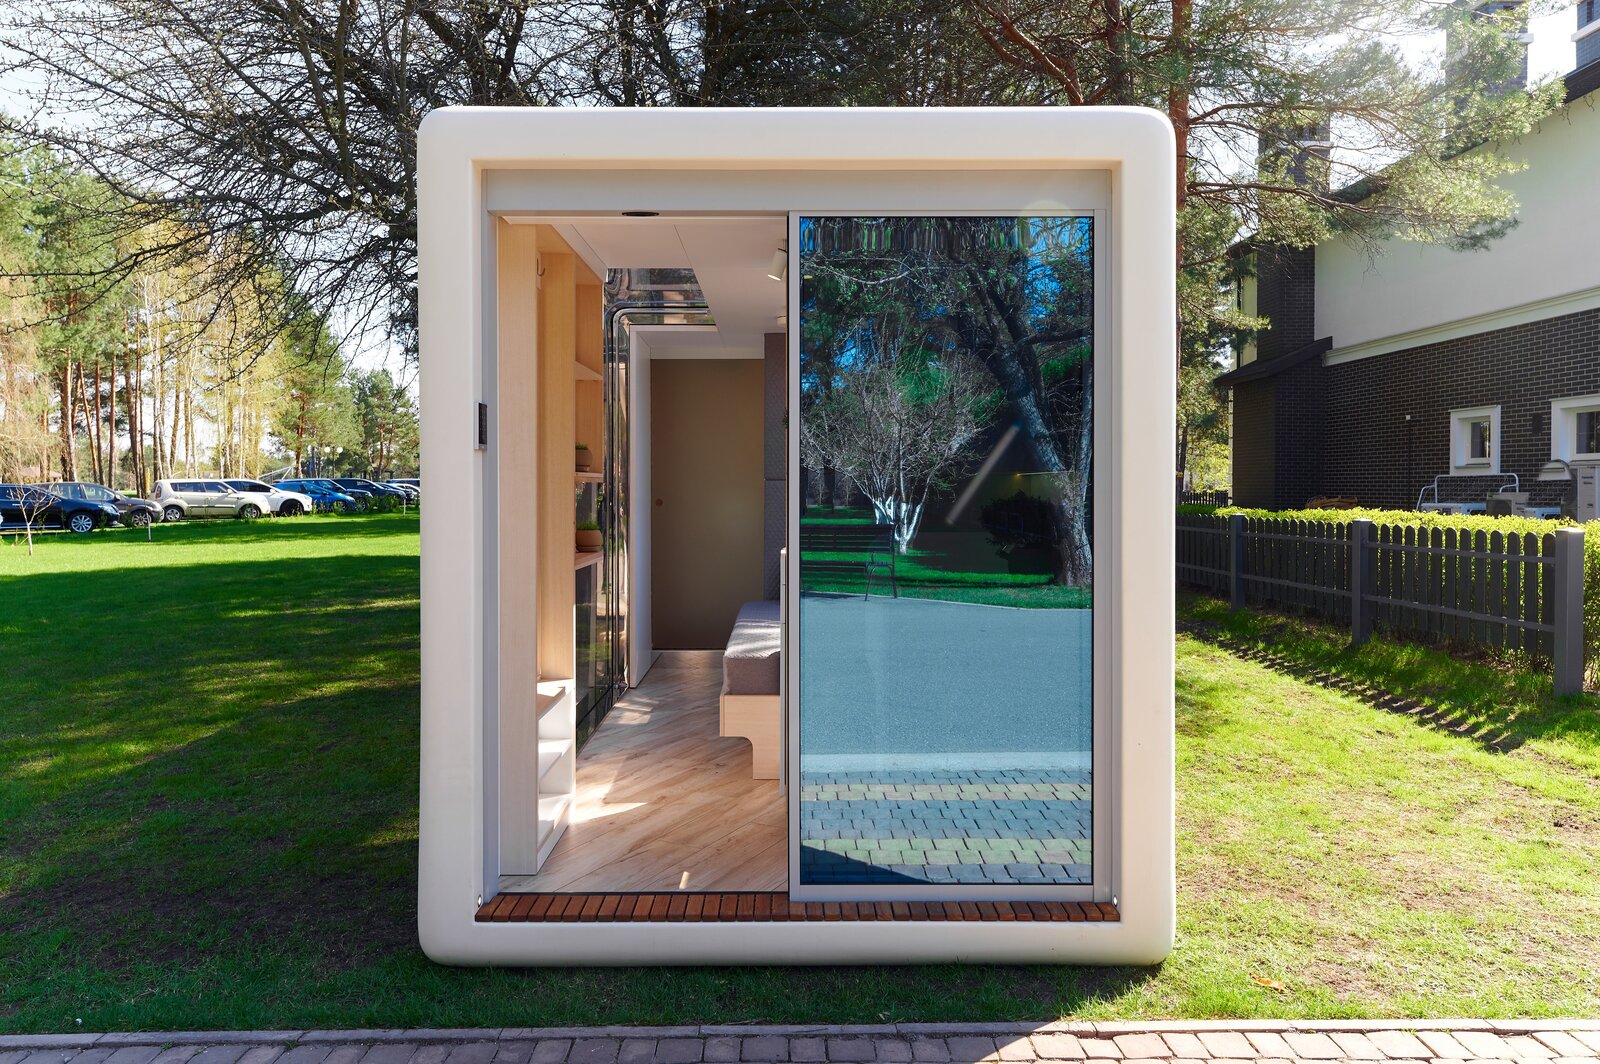 This Futuristic Prefab Tiny Home